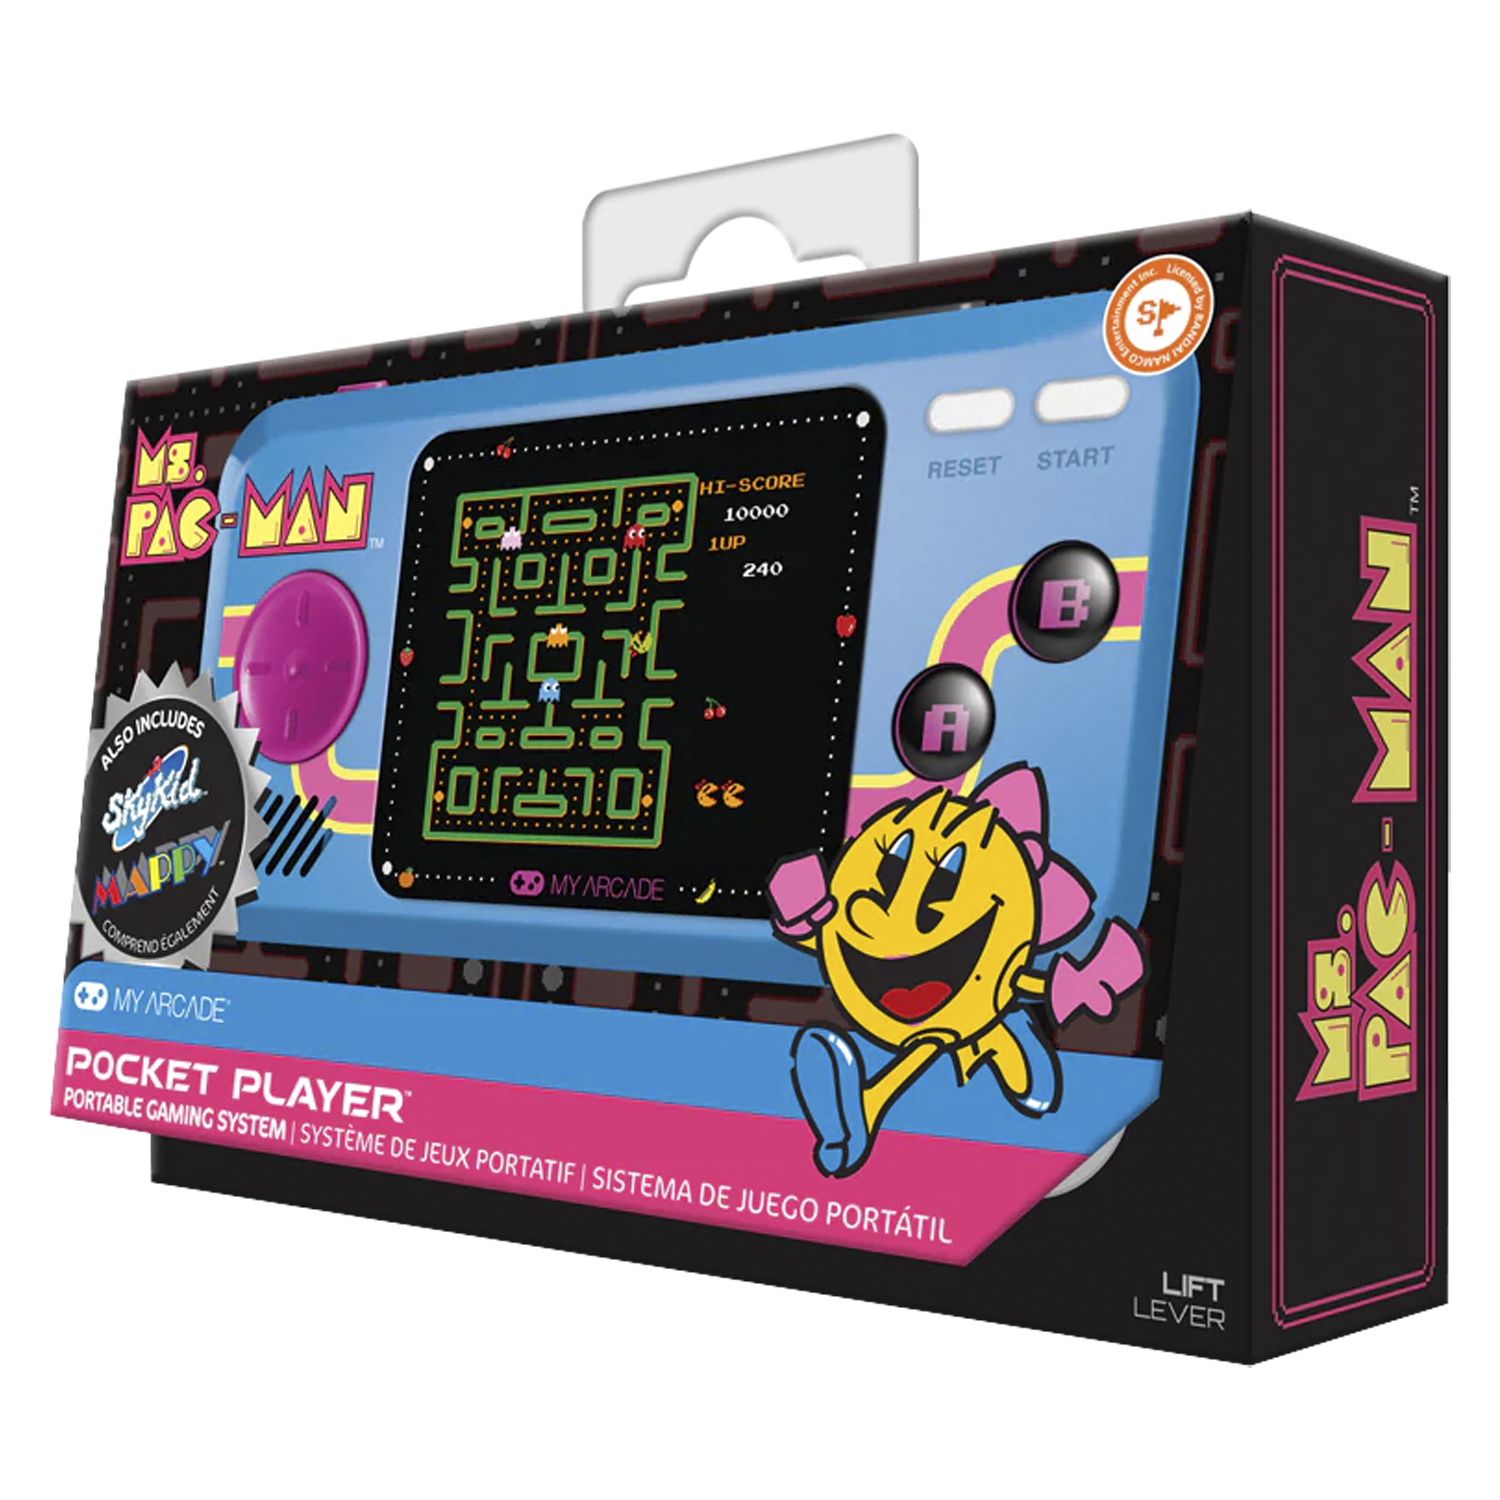 Console My Arcade MS Pacman Pocket Player - DGUNL-3242